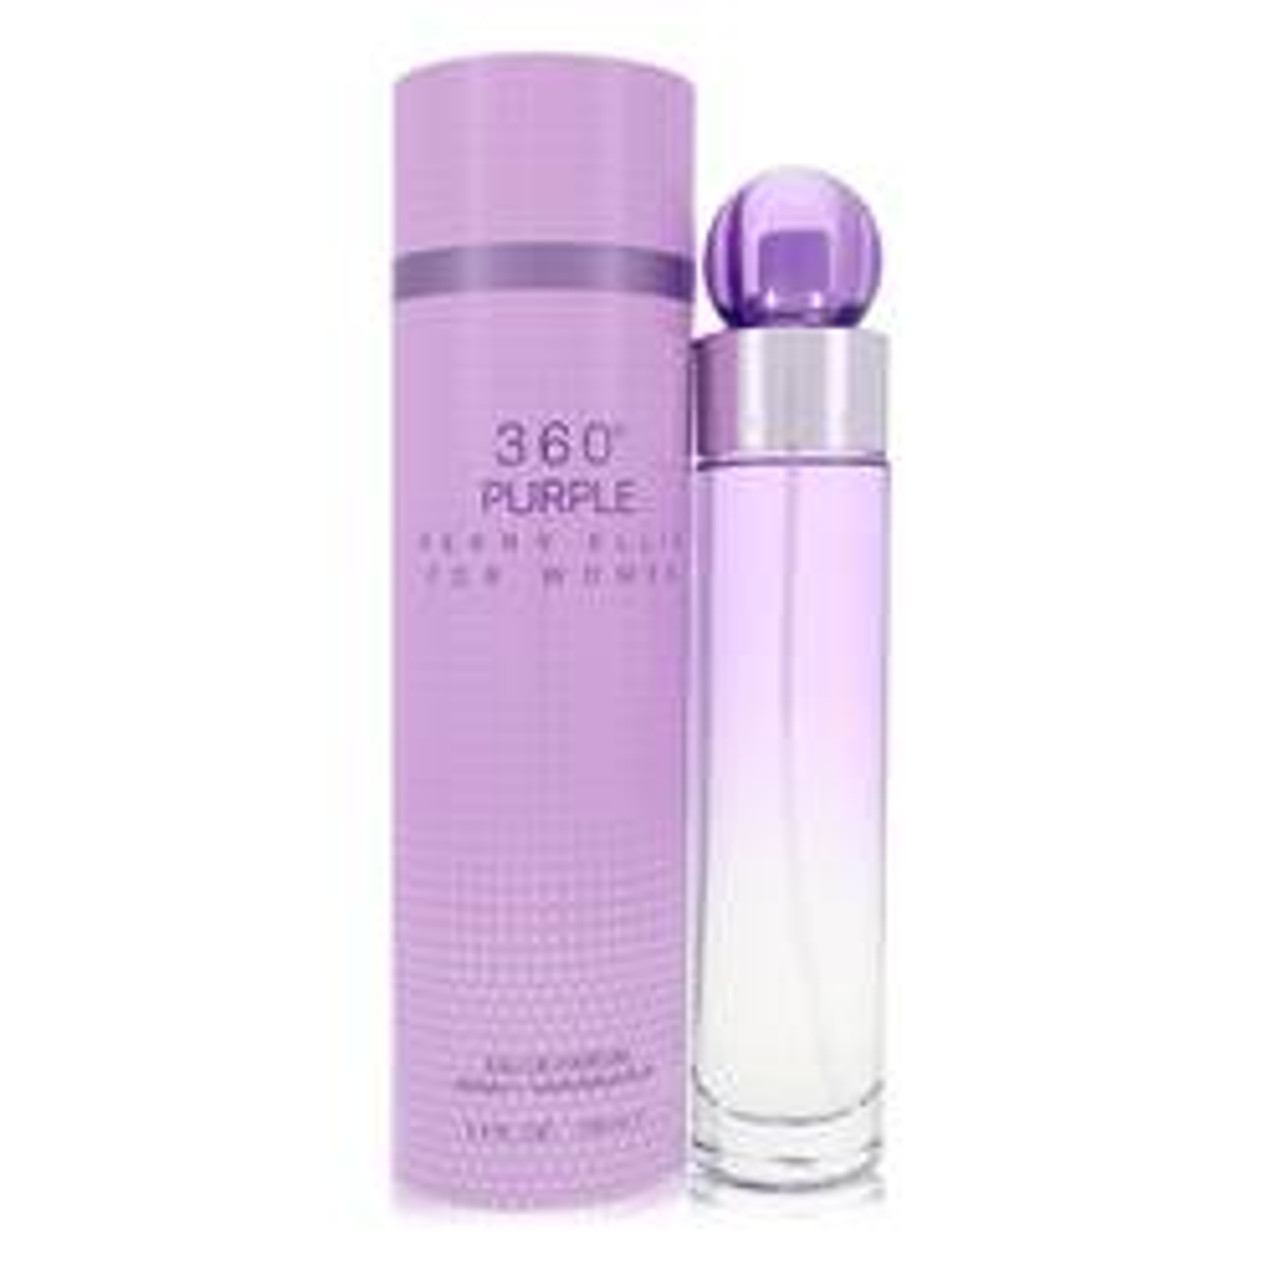 Perry Ellis 360 Purple Perfume By Perry Ellis Eau De Parfum Spray 3.4 oz for Women - [From 83.00 - Choose pk Qty ] - *Ships from Miami